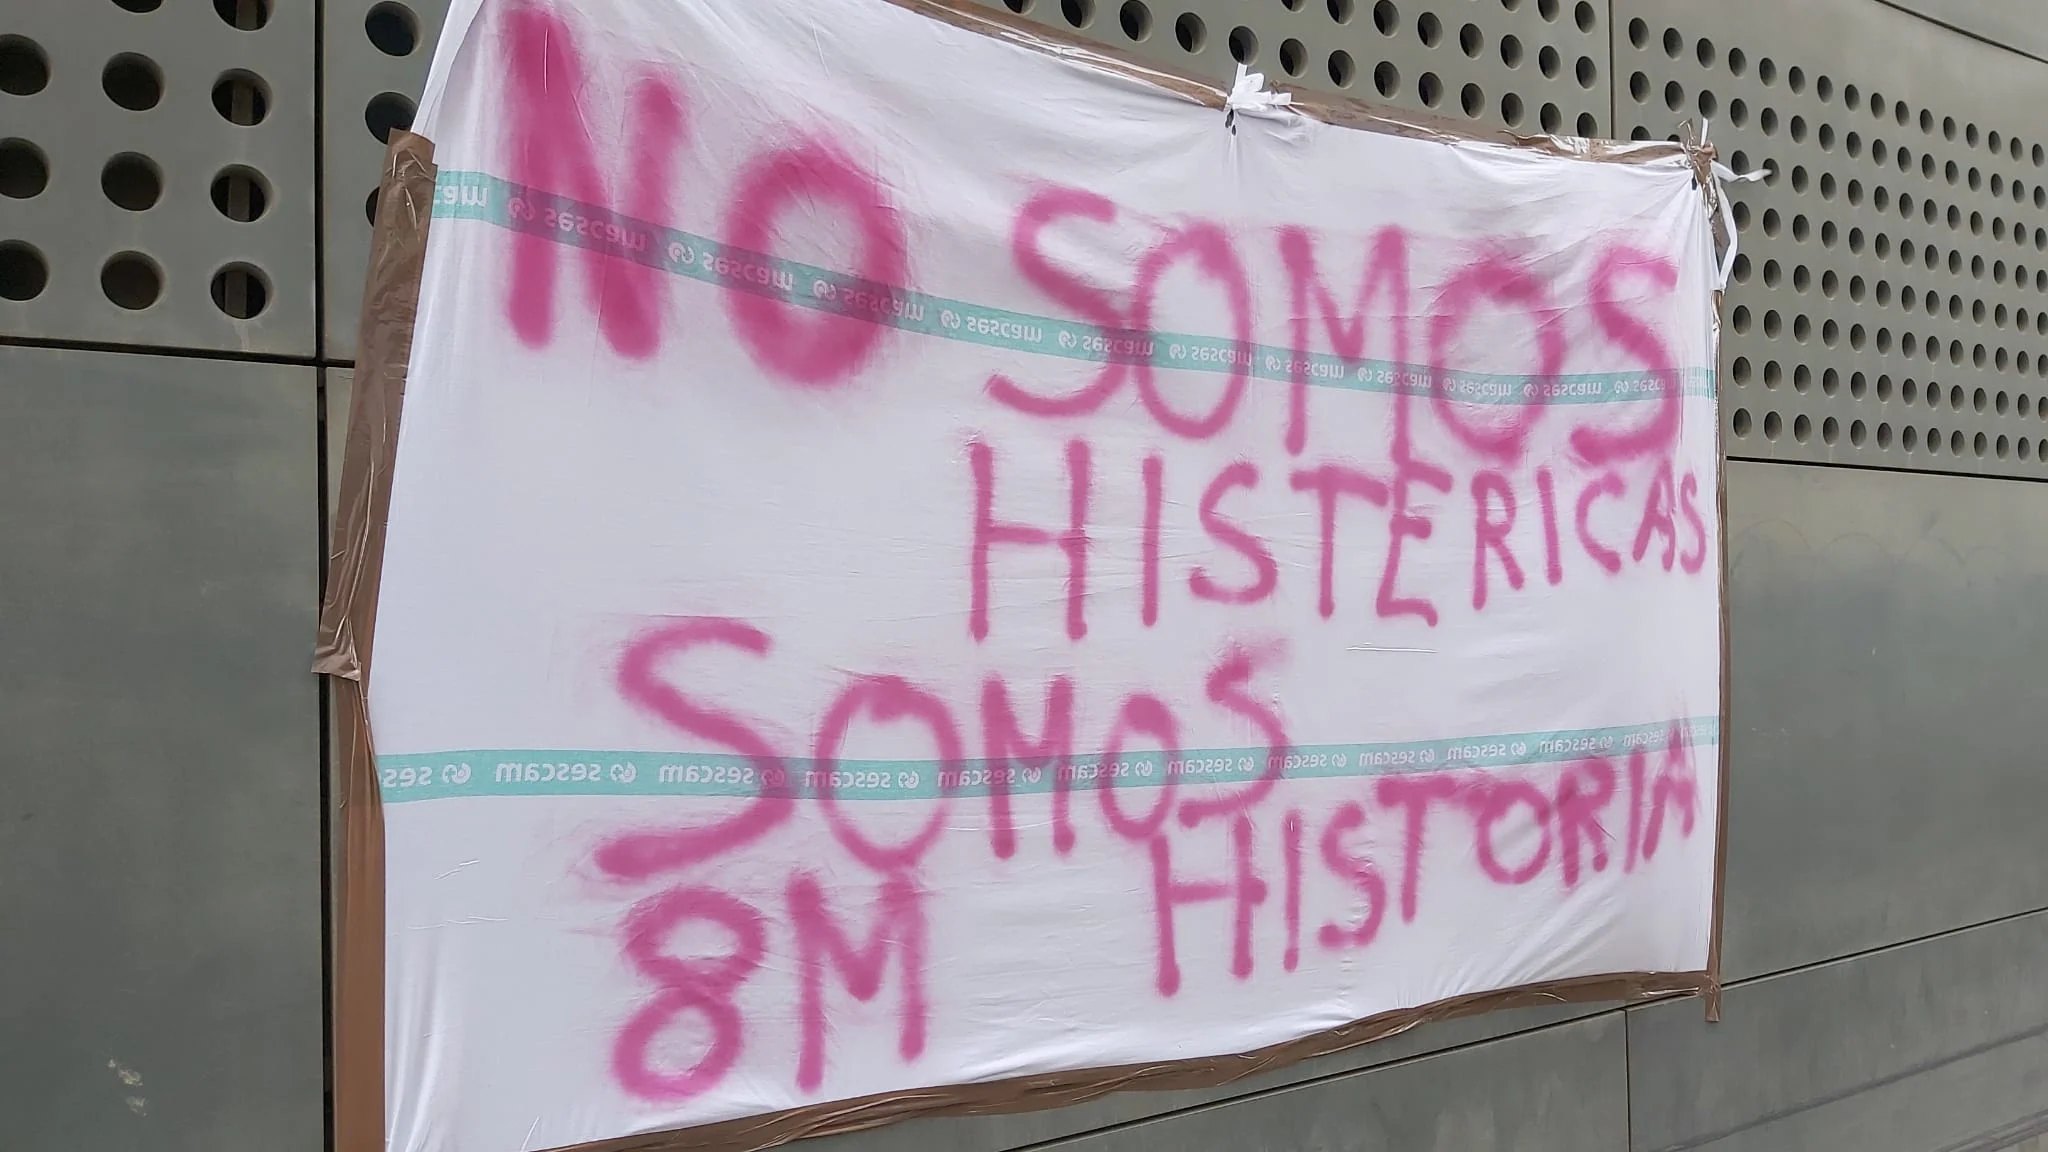 Imagen secundaria 1 - El Hospital de Salamanca retira las pancartas que conmemoran el 8M